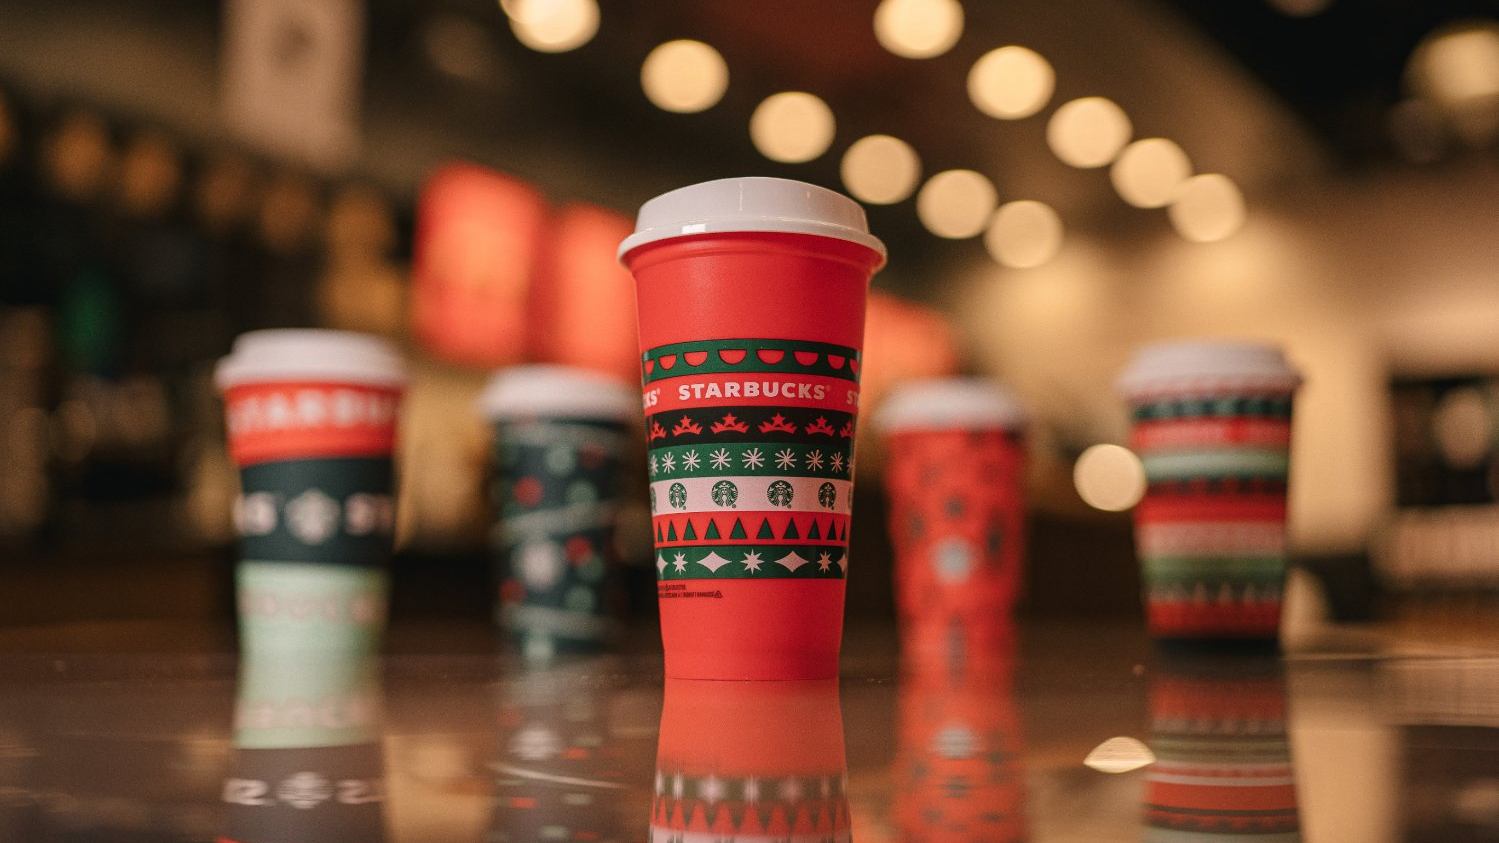 Starbucks unveils Christmas 2020 menu including Friends-inspired